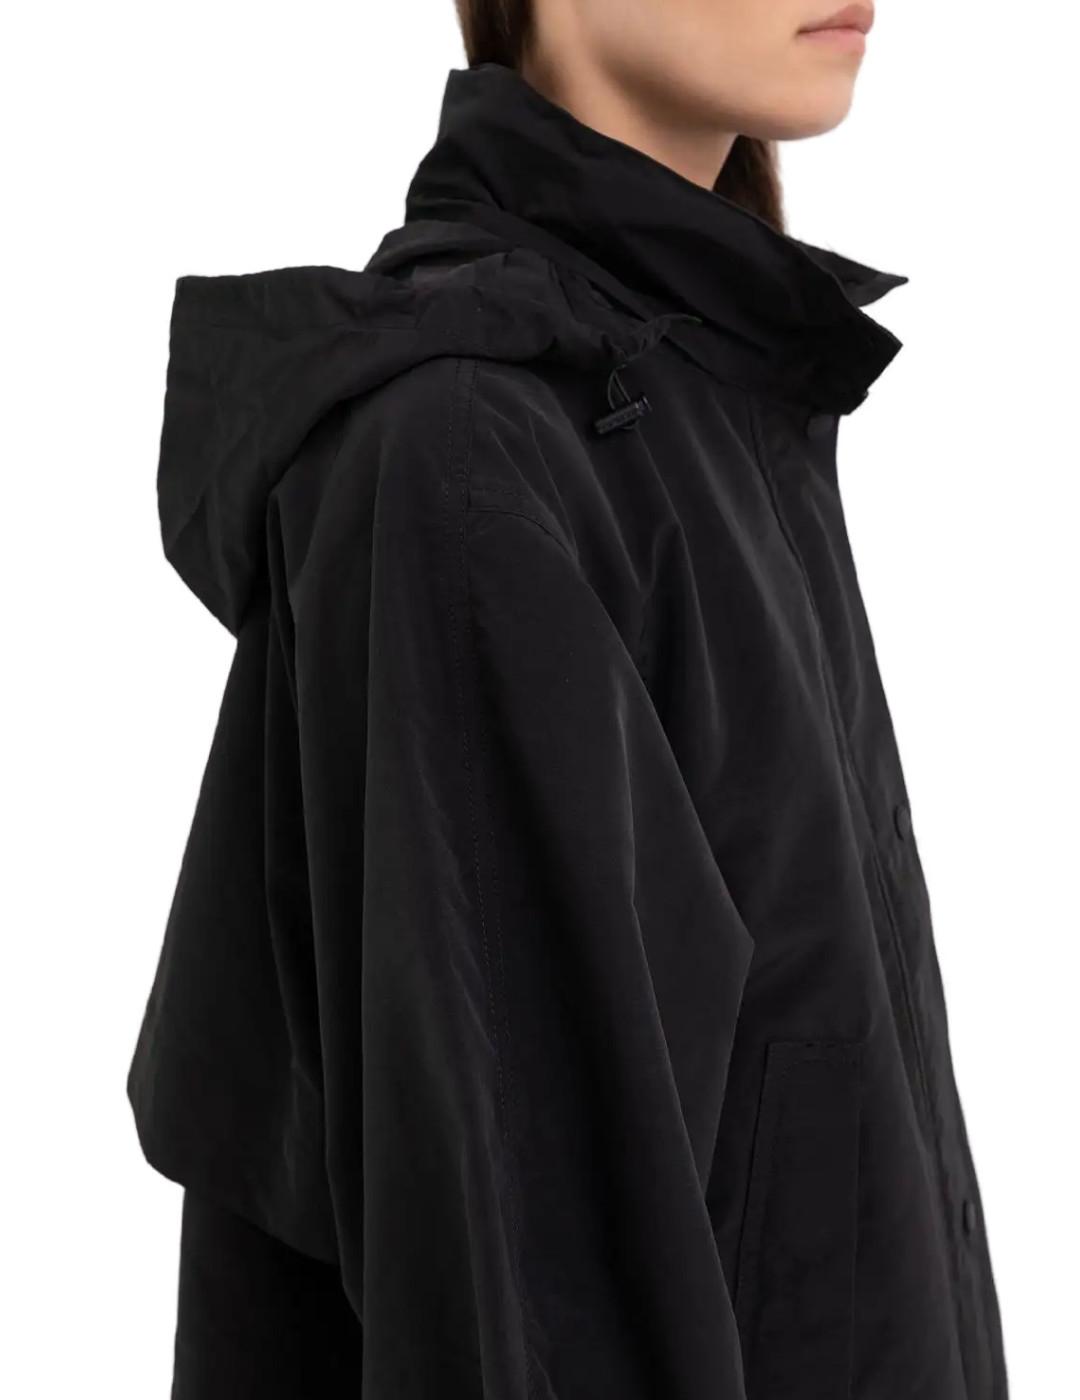 Chaqueta larga Replay negra con capucha extraible para mujer